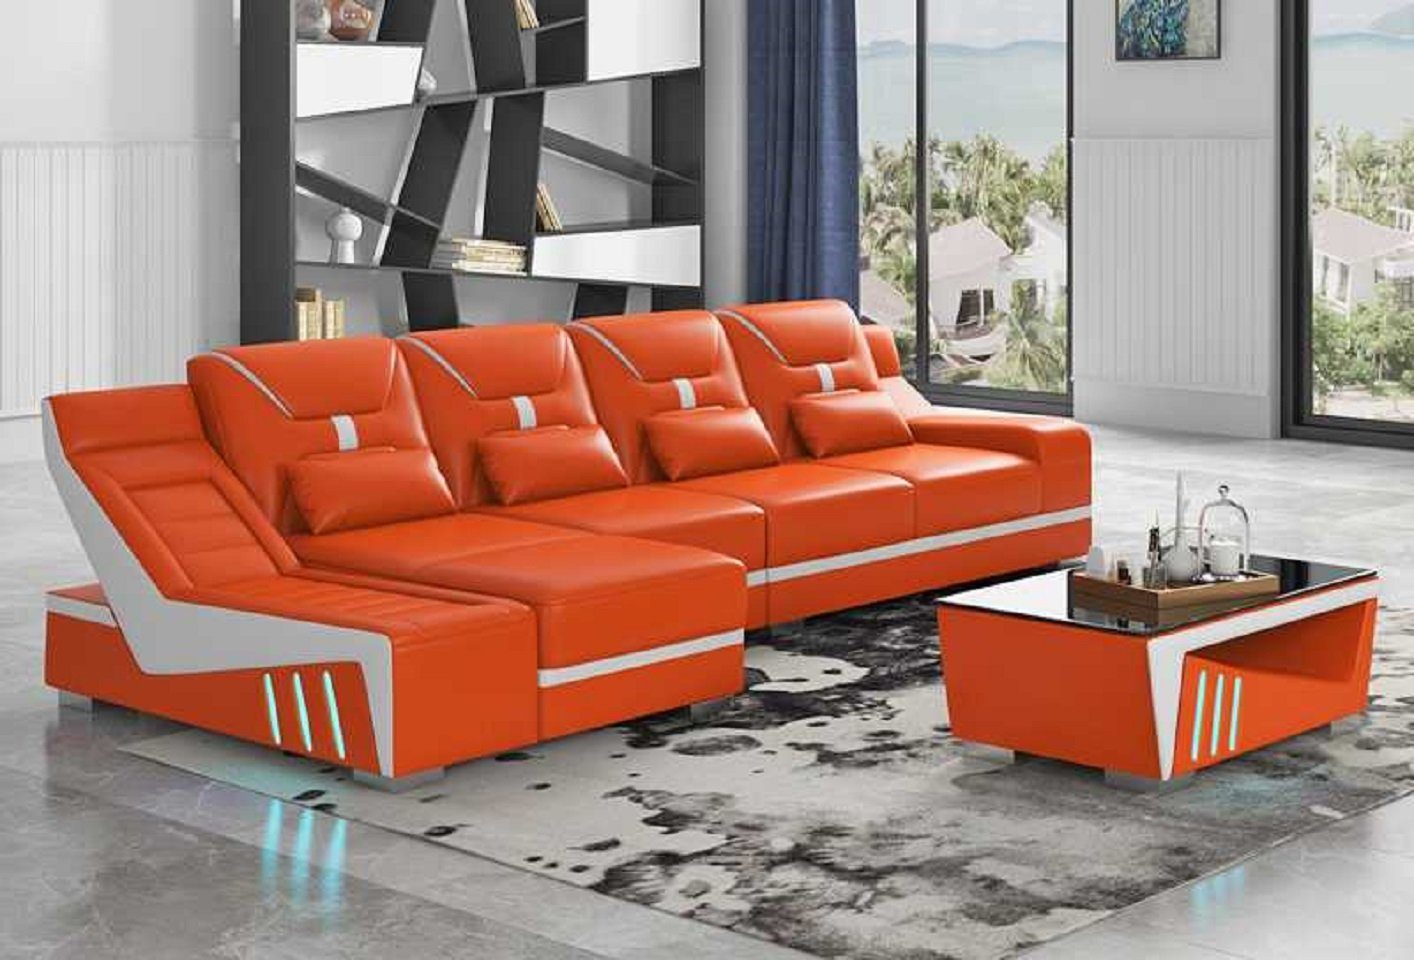 Eck Ecksofa Couch Sofas L Sofa 3 Designersofa Ecksofa Teile, Orange Europe Modern Form in Möbel, JVmoebel Made